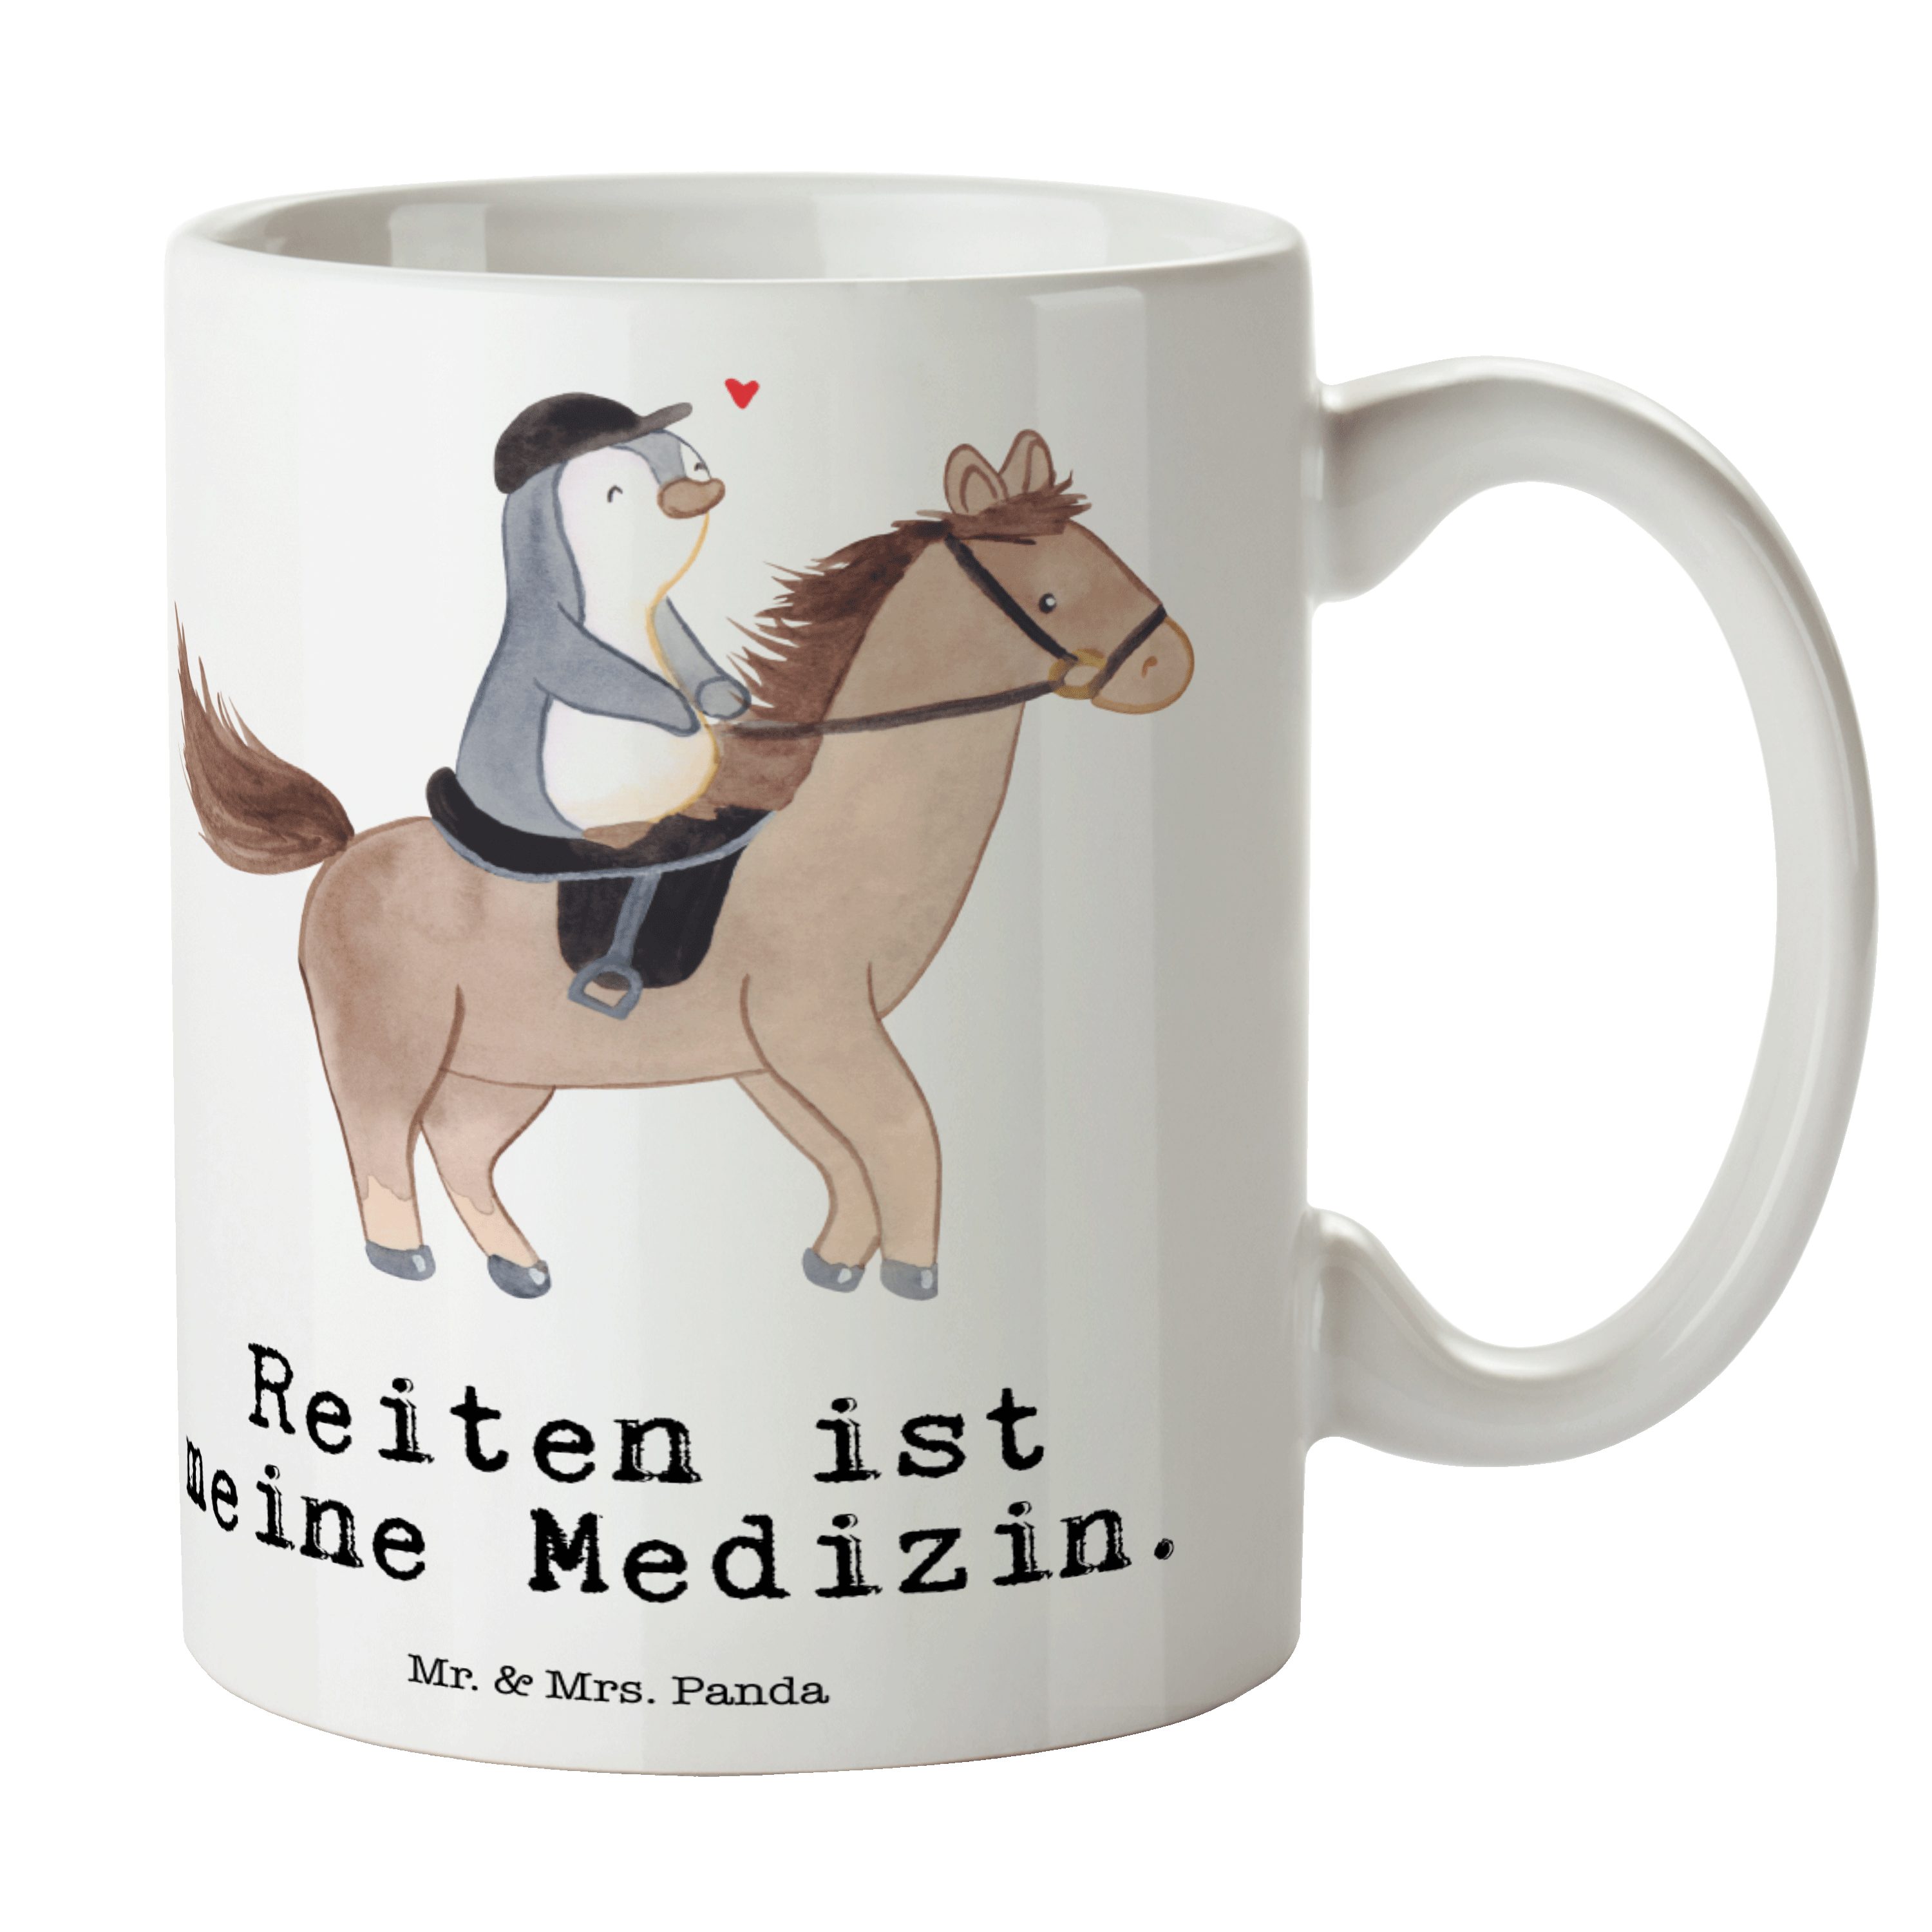 Mr. & Mrs. Panda Tasse Pferd Reiten Medizin - Weiß - Geschenk, Sportart, Büro Tasse, Teetass, Keramik